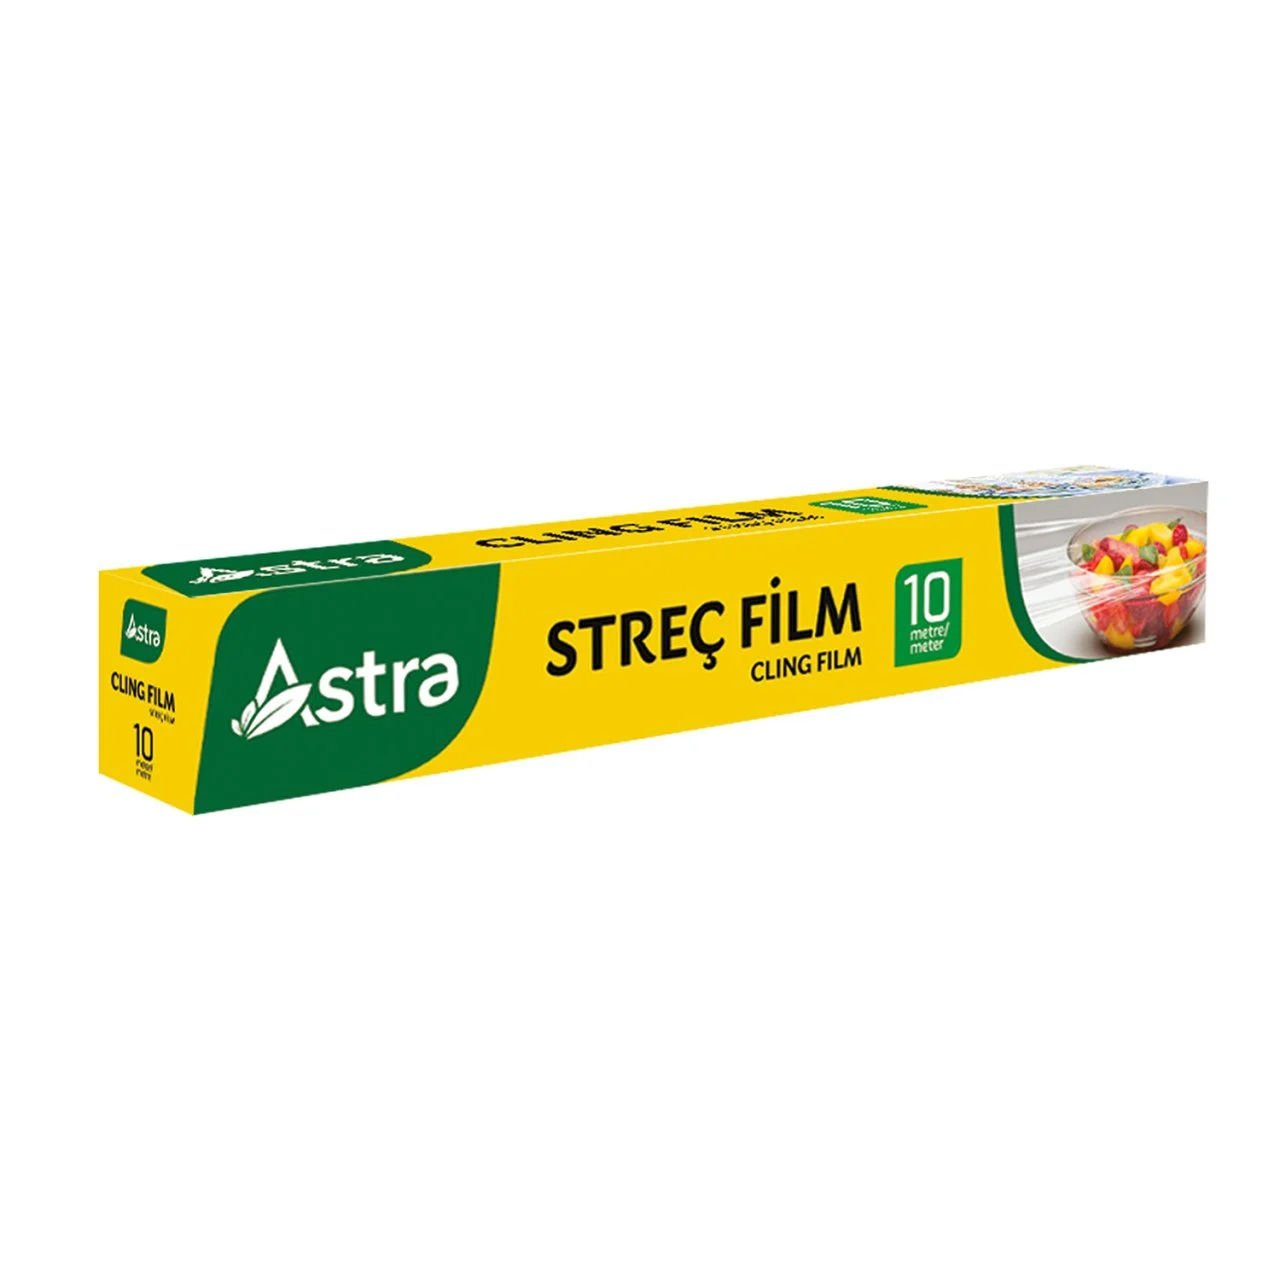 Astra Streç Film 10 M